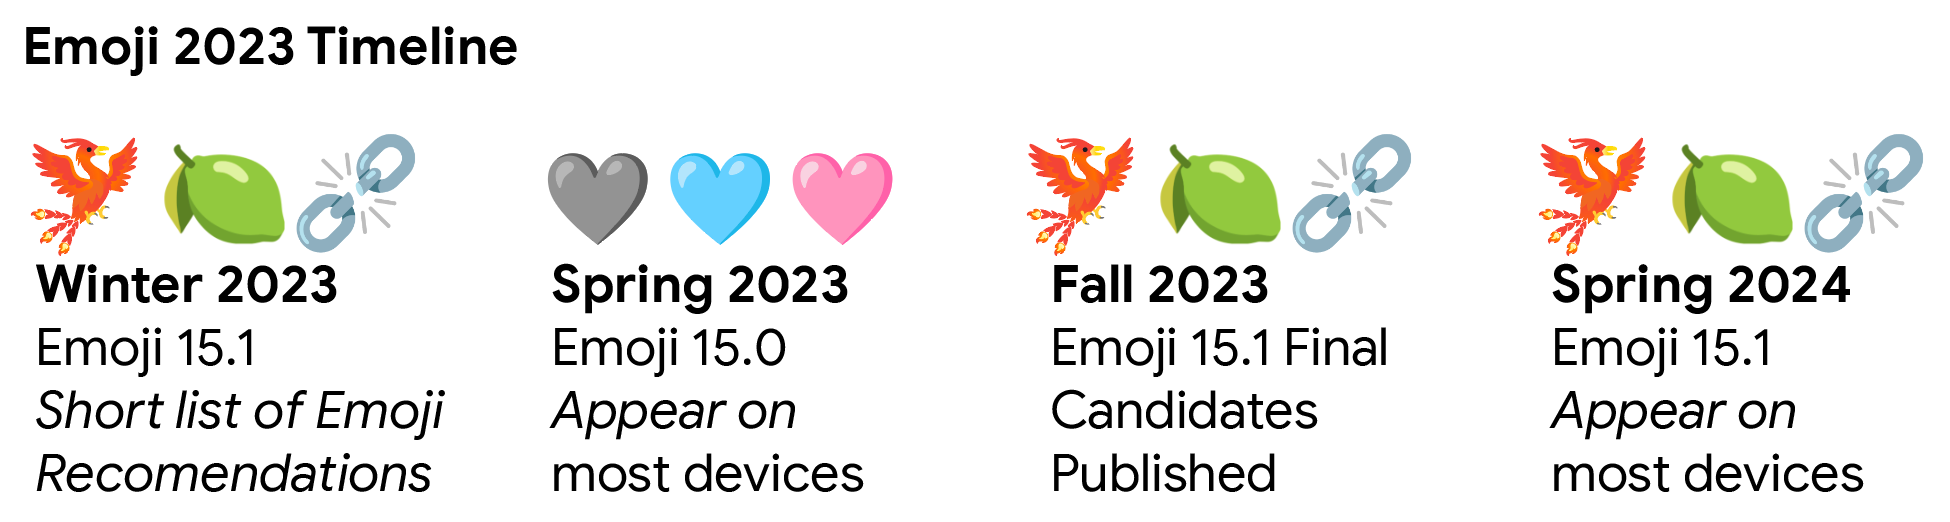 Emoji 2023 timeline image